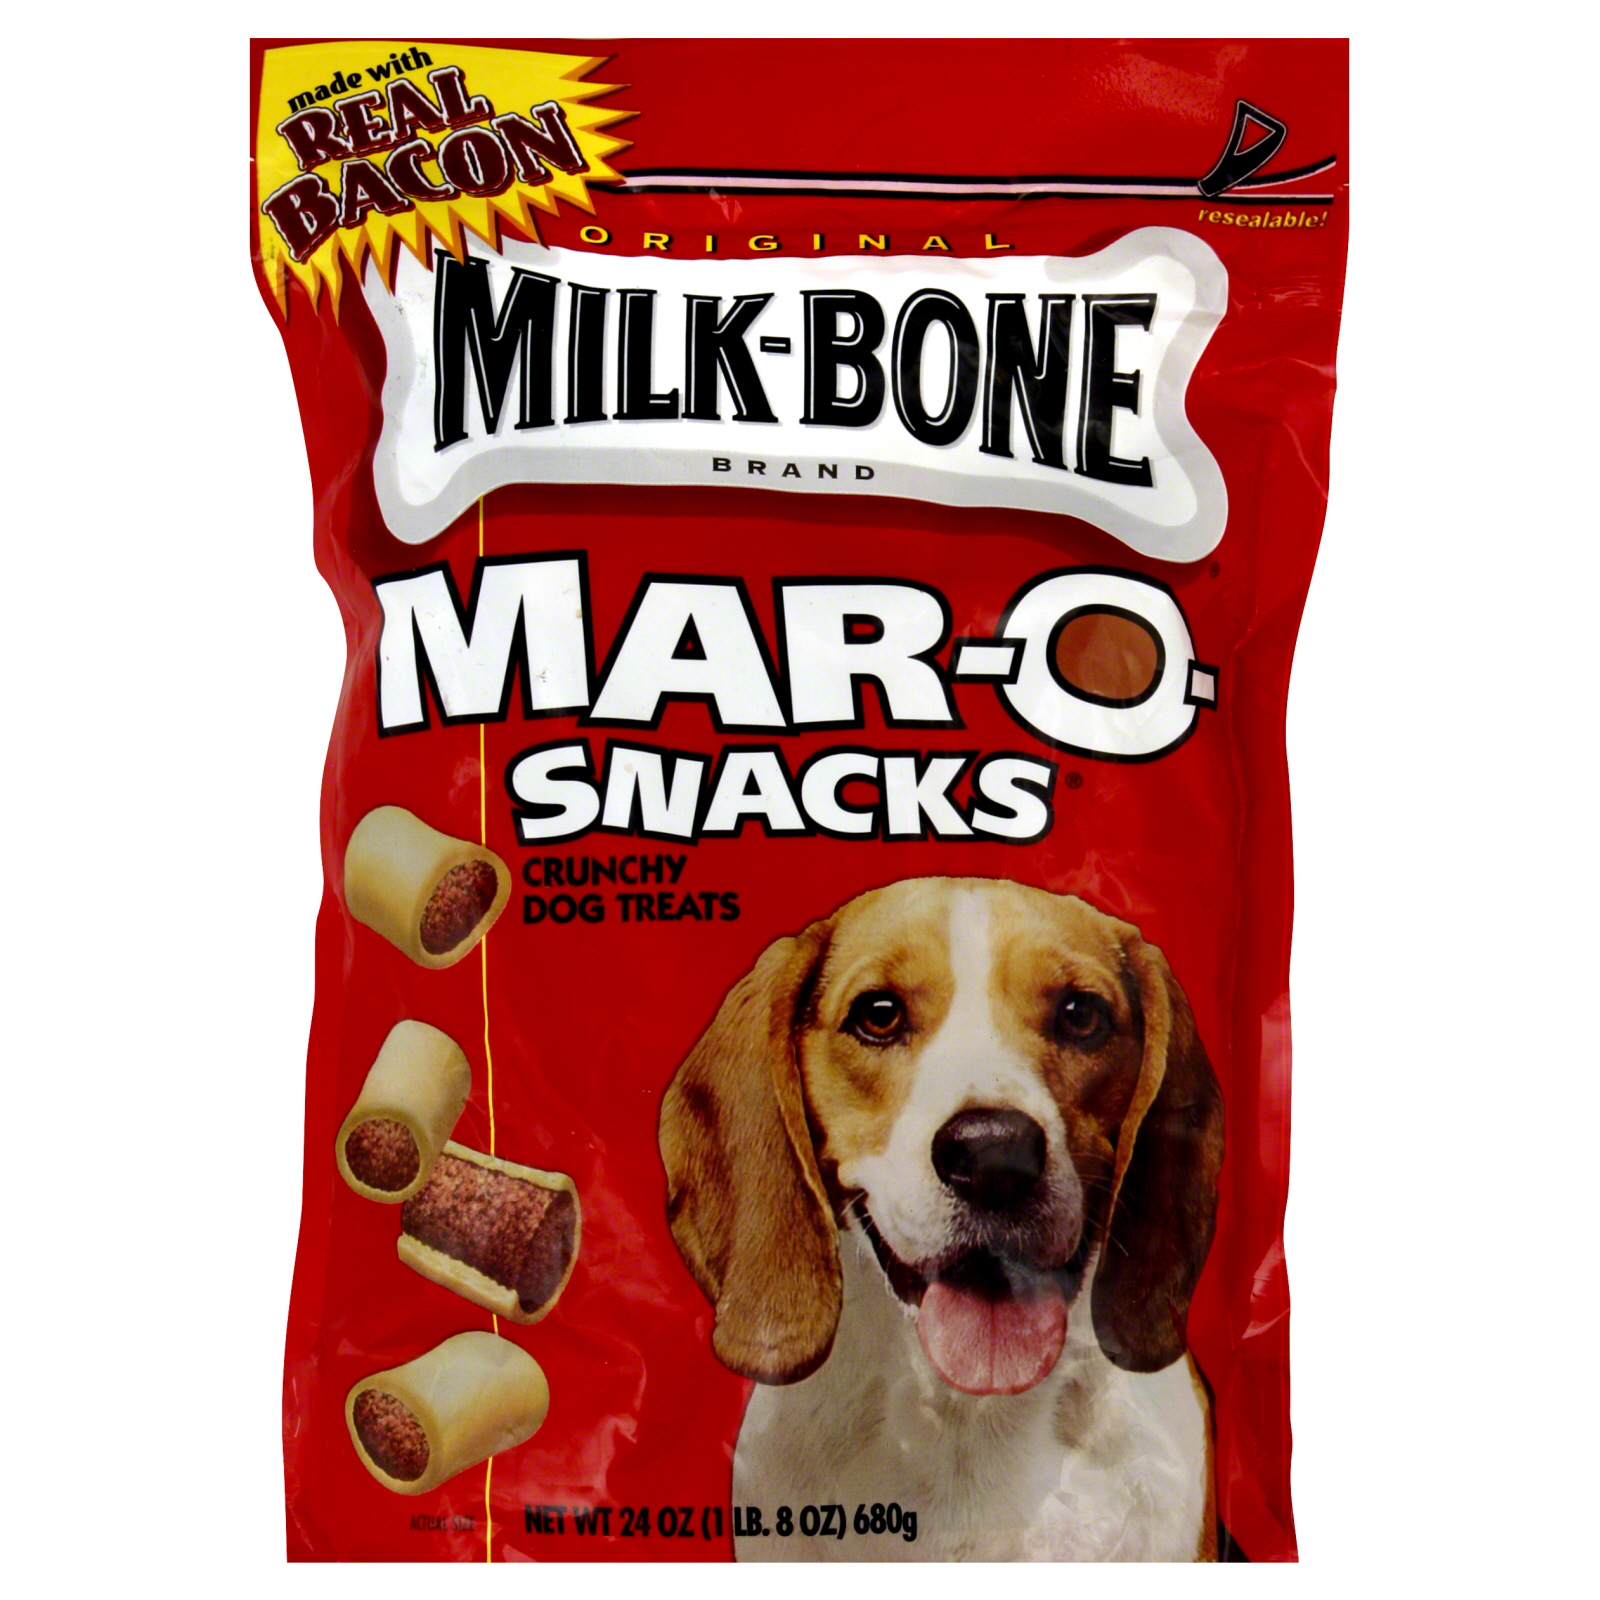 Milk-Bone Mar-O-Snacks Crunchy Dog Treats, Original, 24 oz (1 lb 8 oz) 680 g